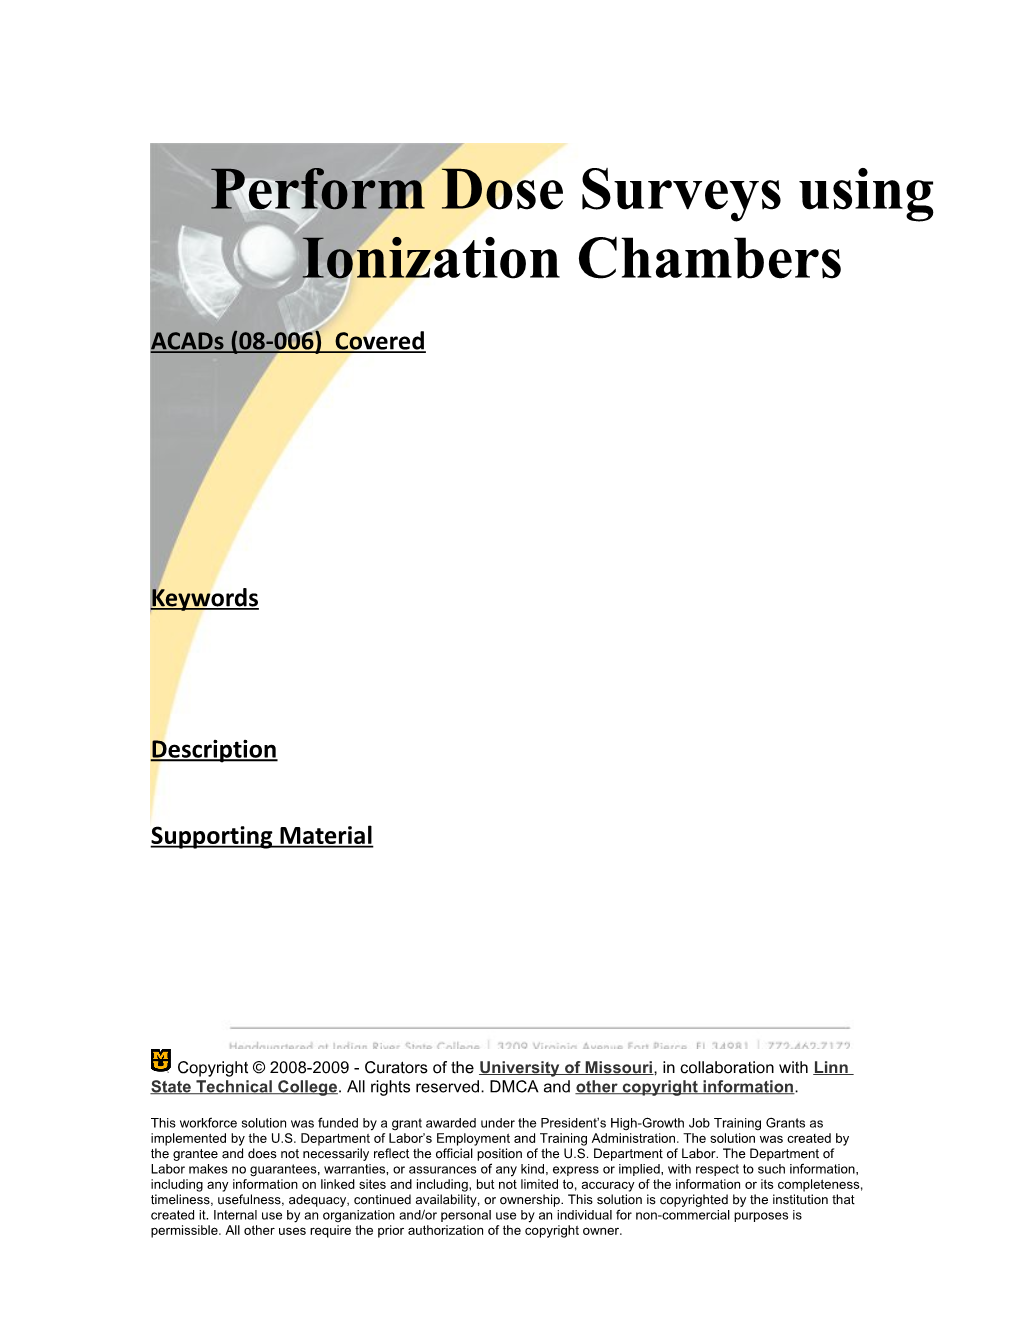 Module 1:Perform Dose Surveys Using Ionization Chambers